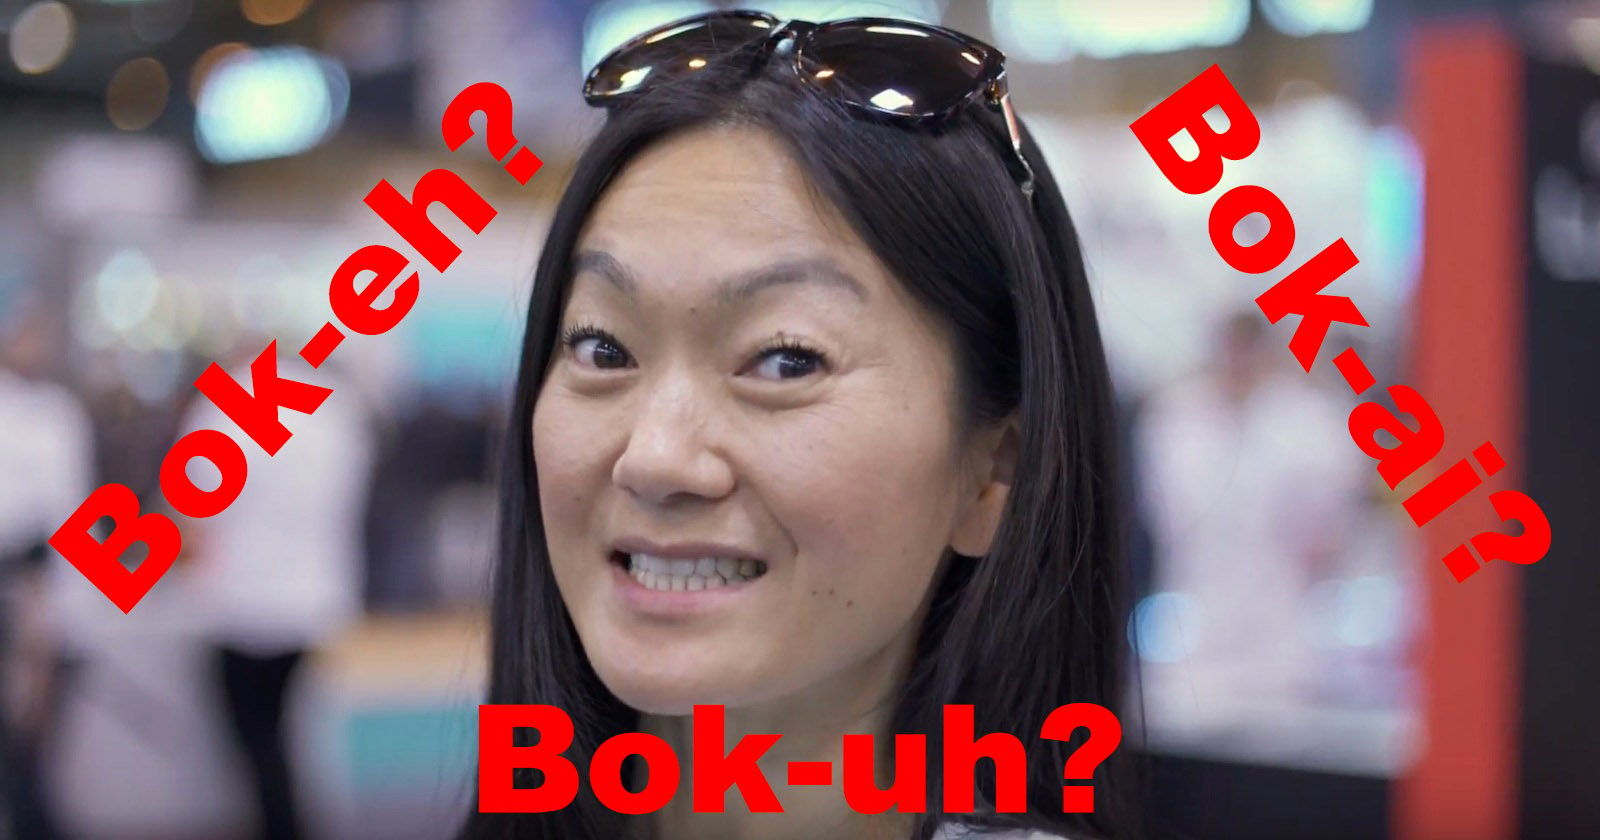 Bokeh or Bokeh? Photographers Share Their Personal Pronunciation